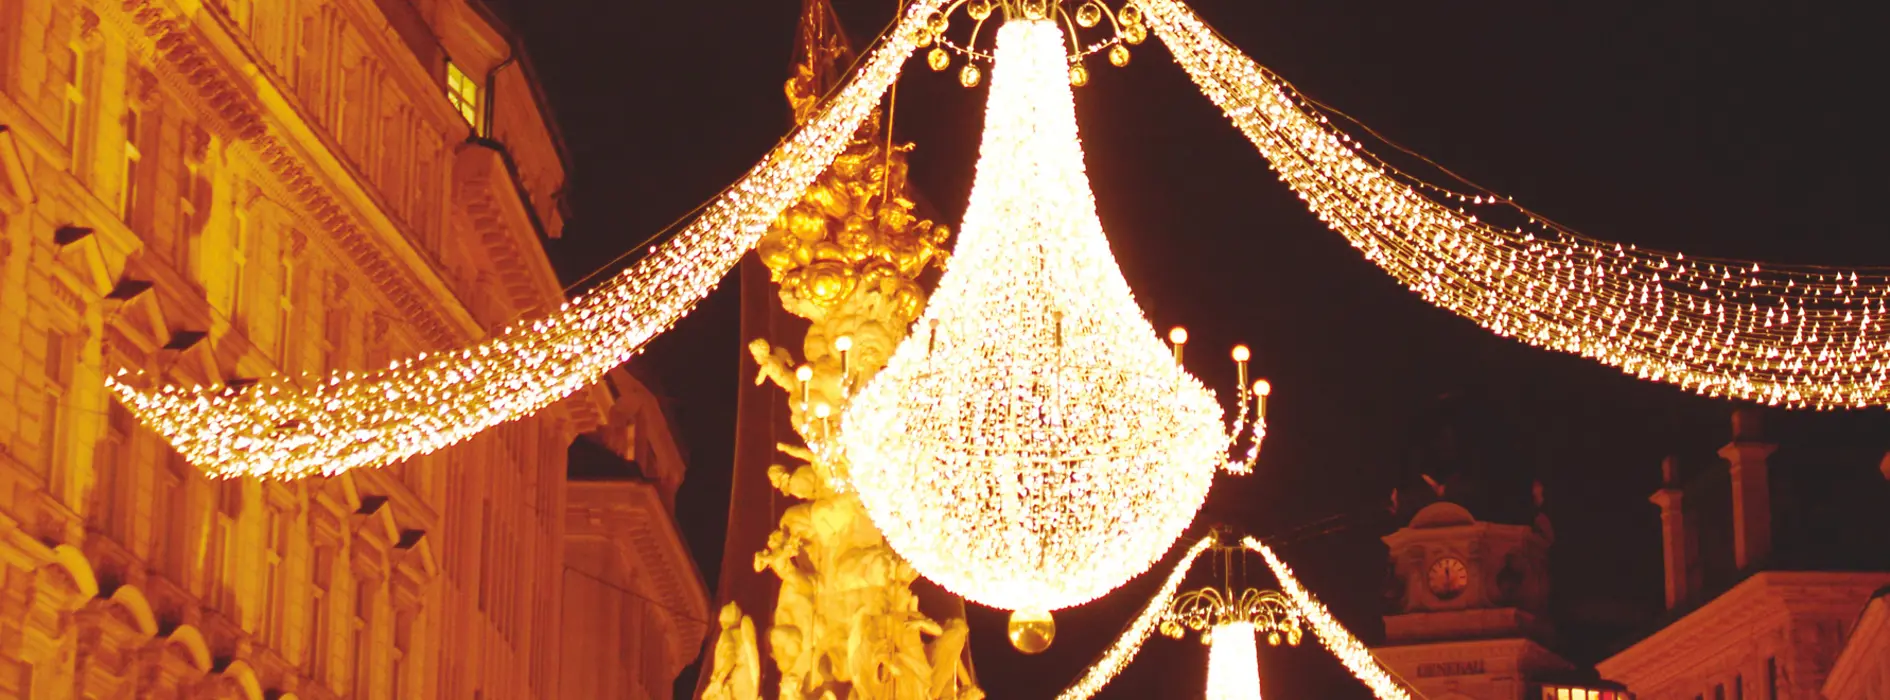 Illuminations de Noël à Vienne